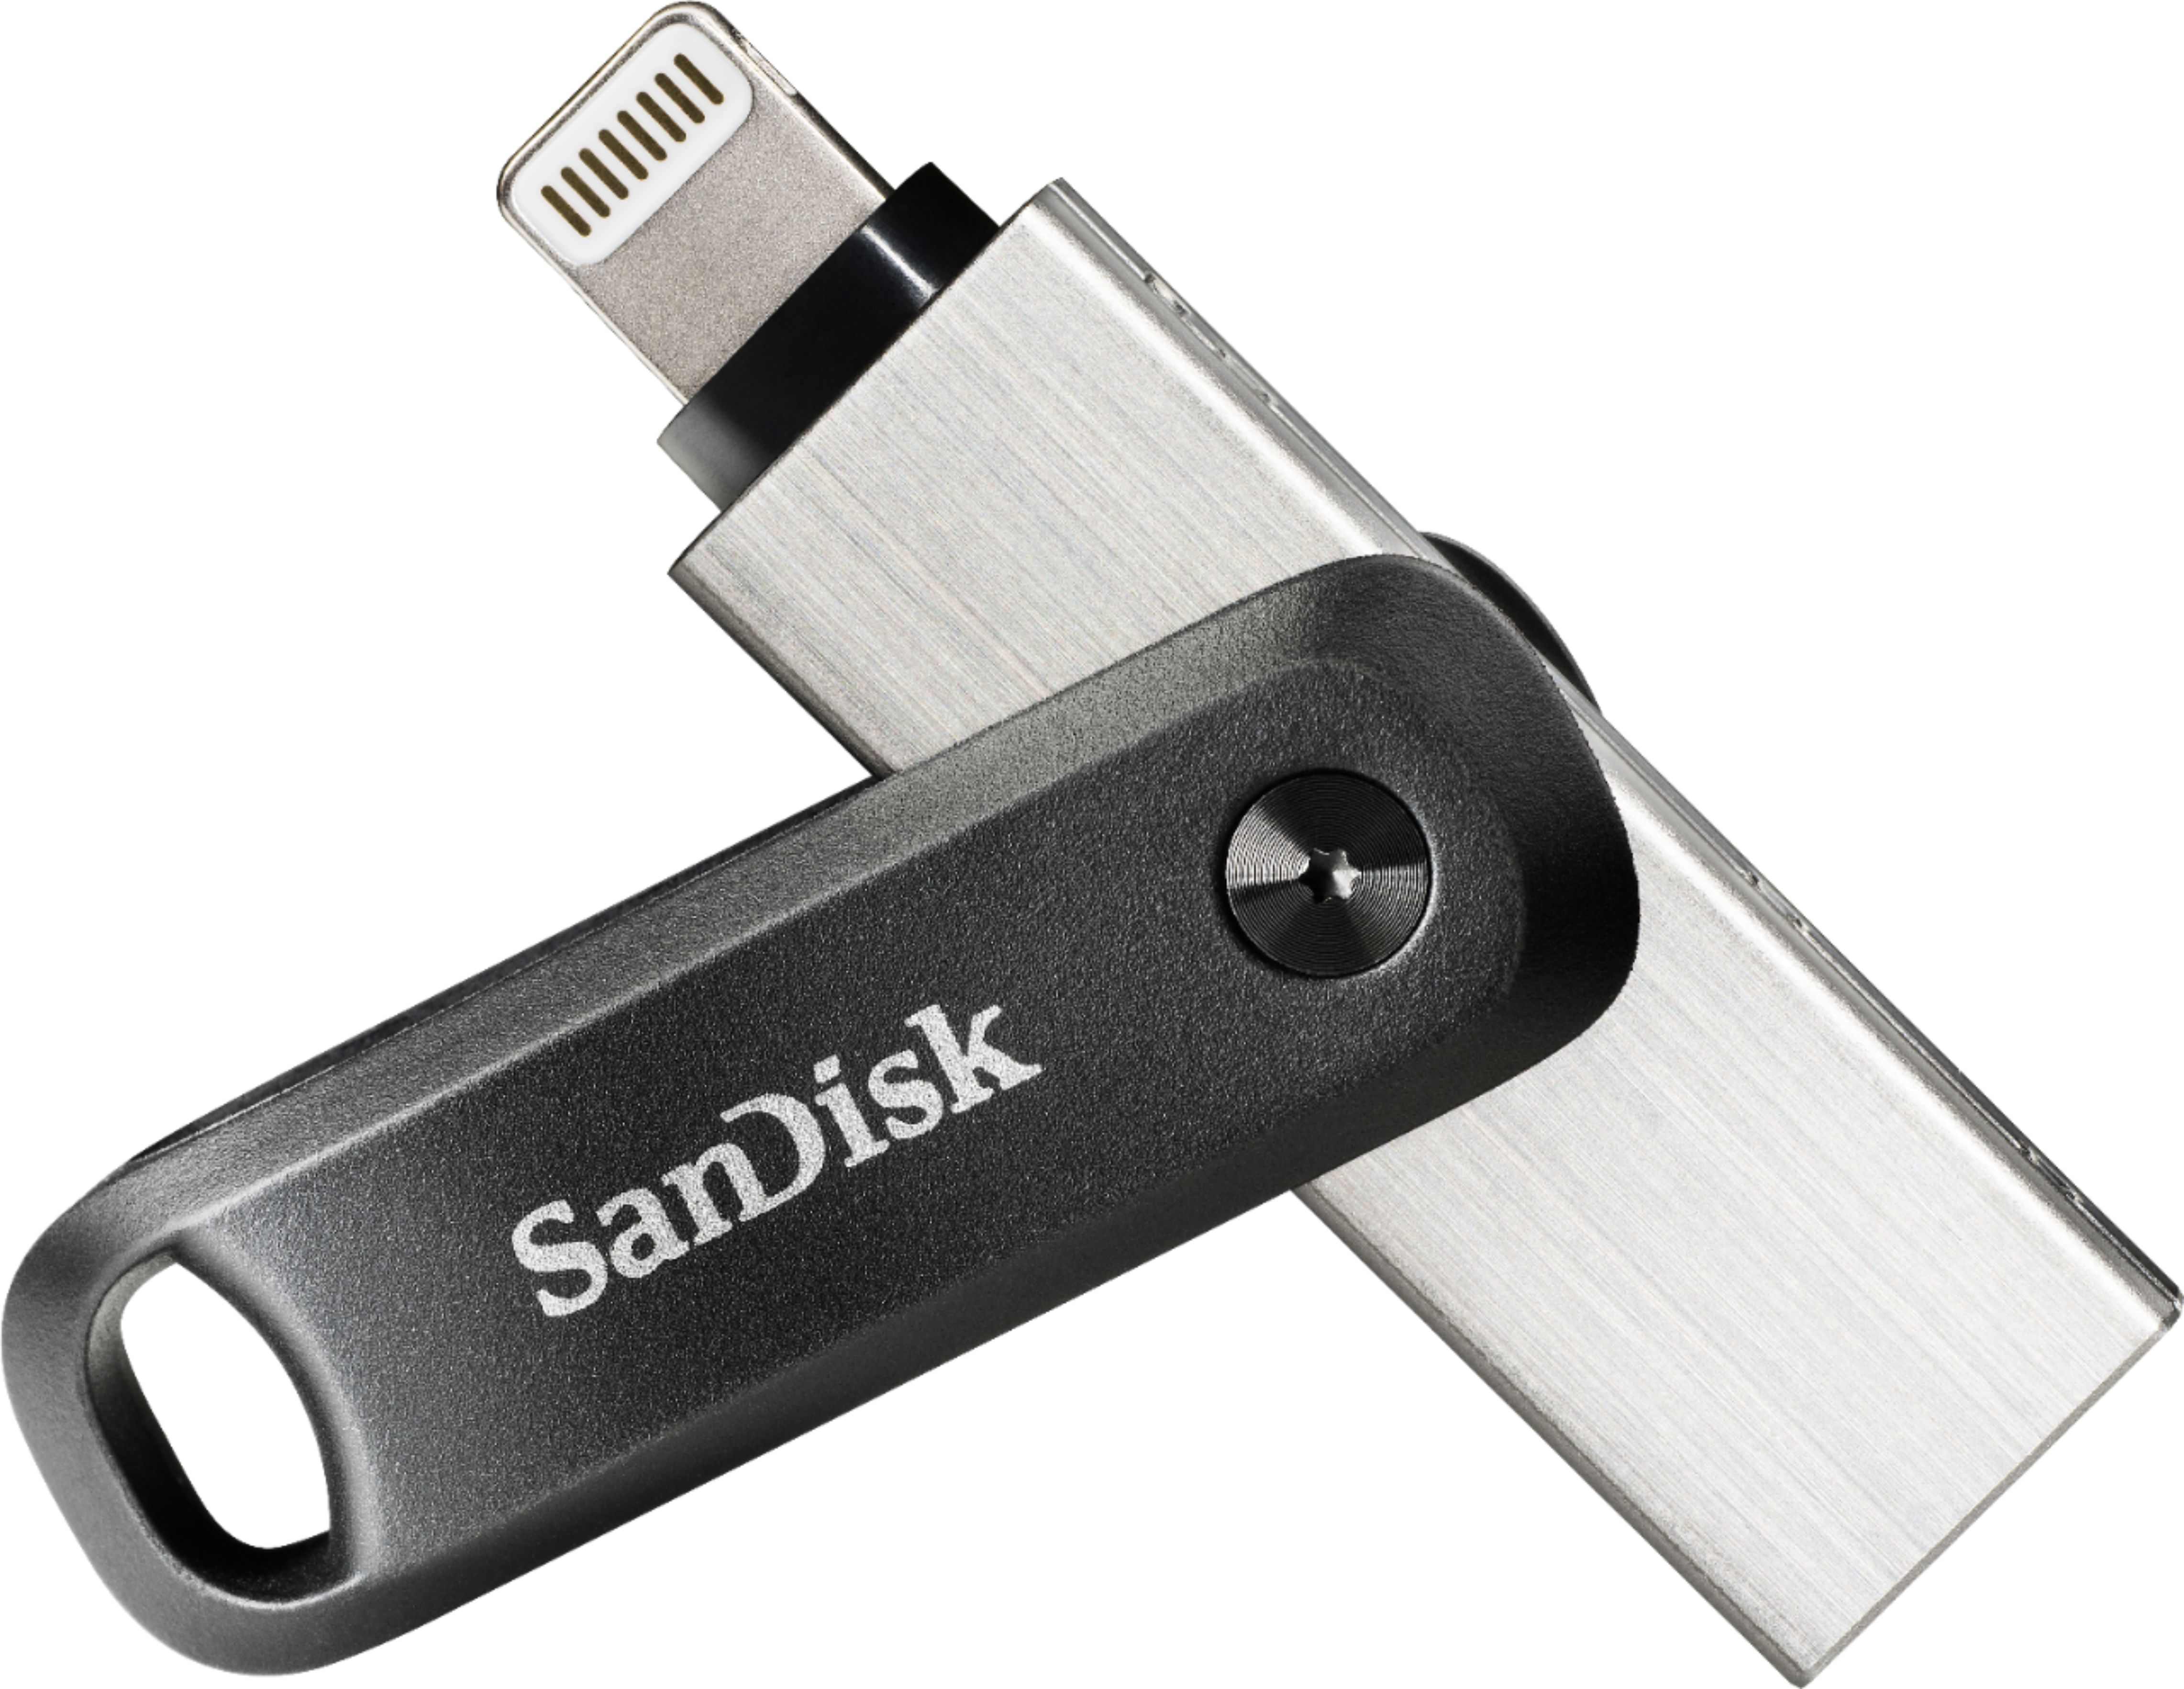 SanDisk SDIZ90N-256G www.eva.gov.co